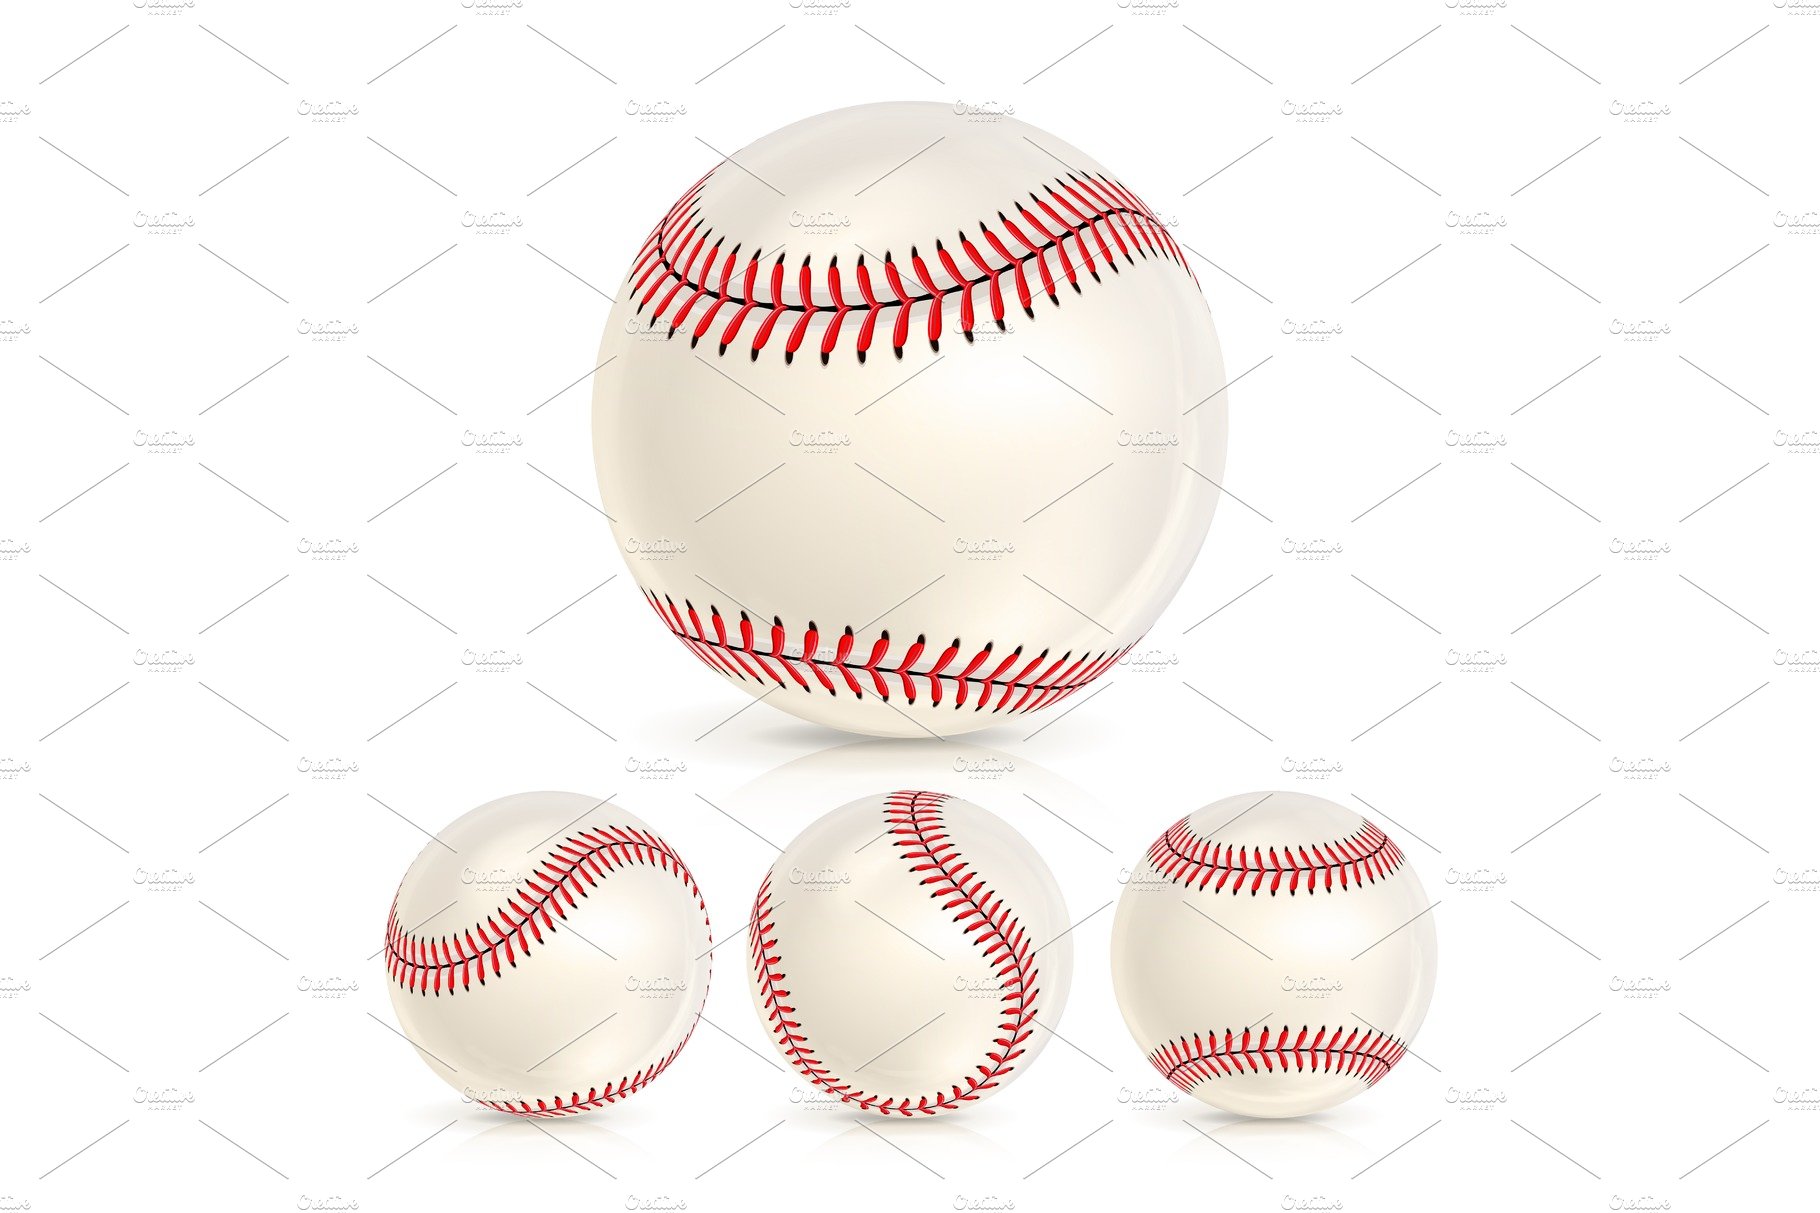 Baseball Leather Ball Close-up Set cover image.